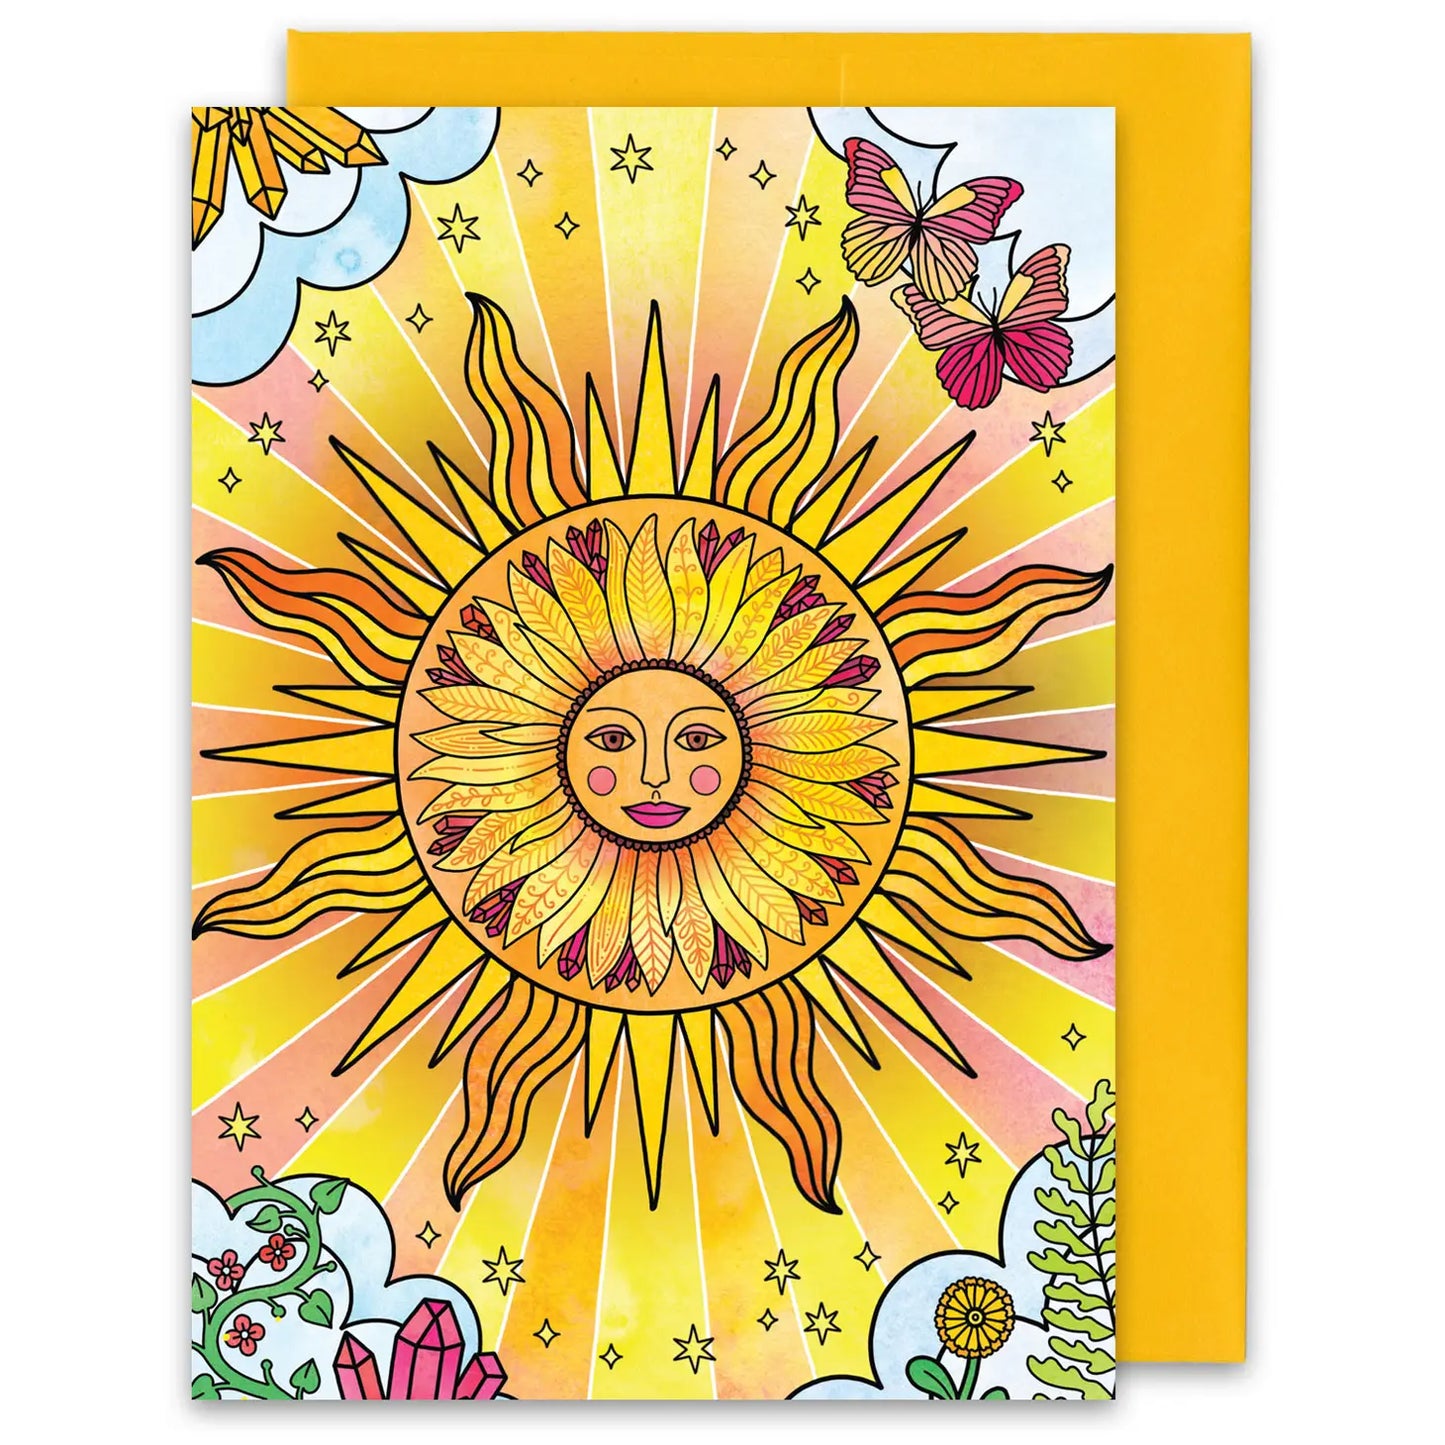 The Sun Greeting Card - Moon Room Shop and Wellness